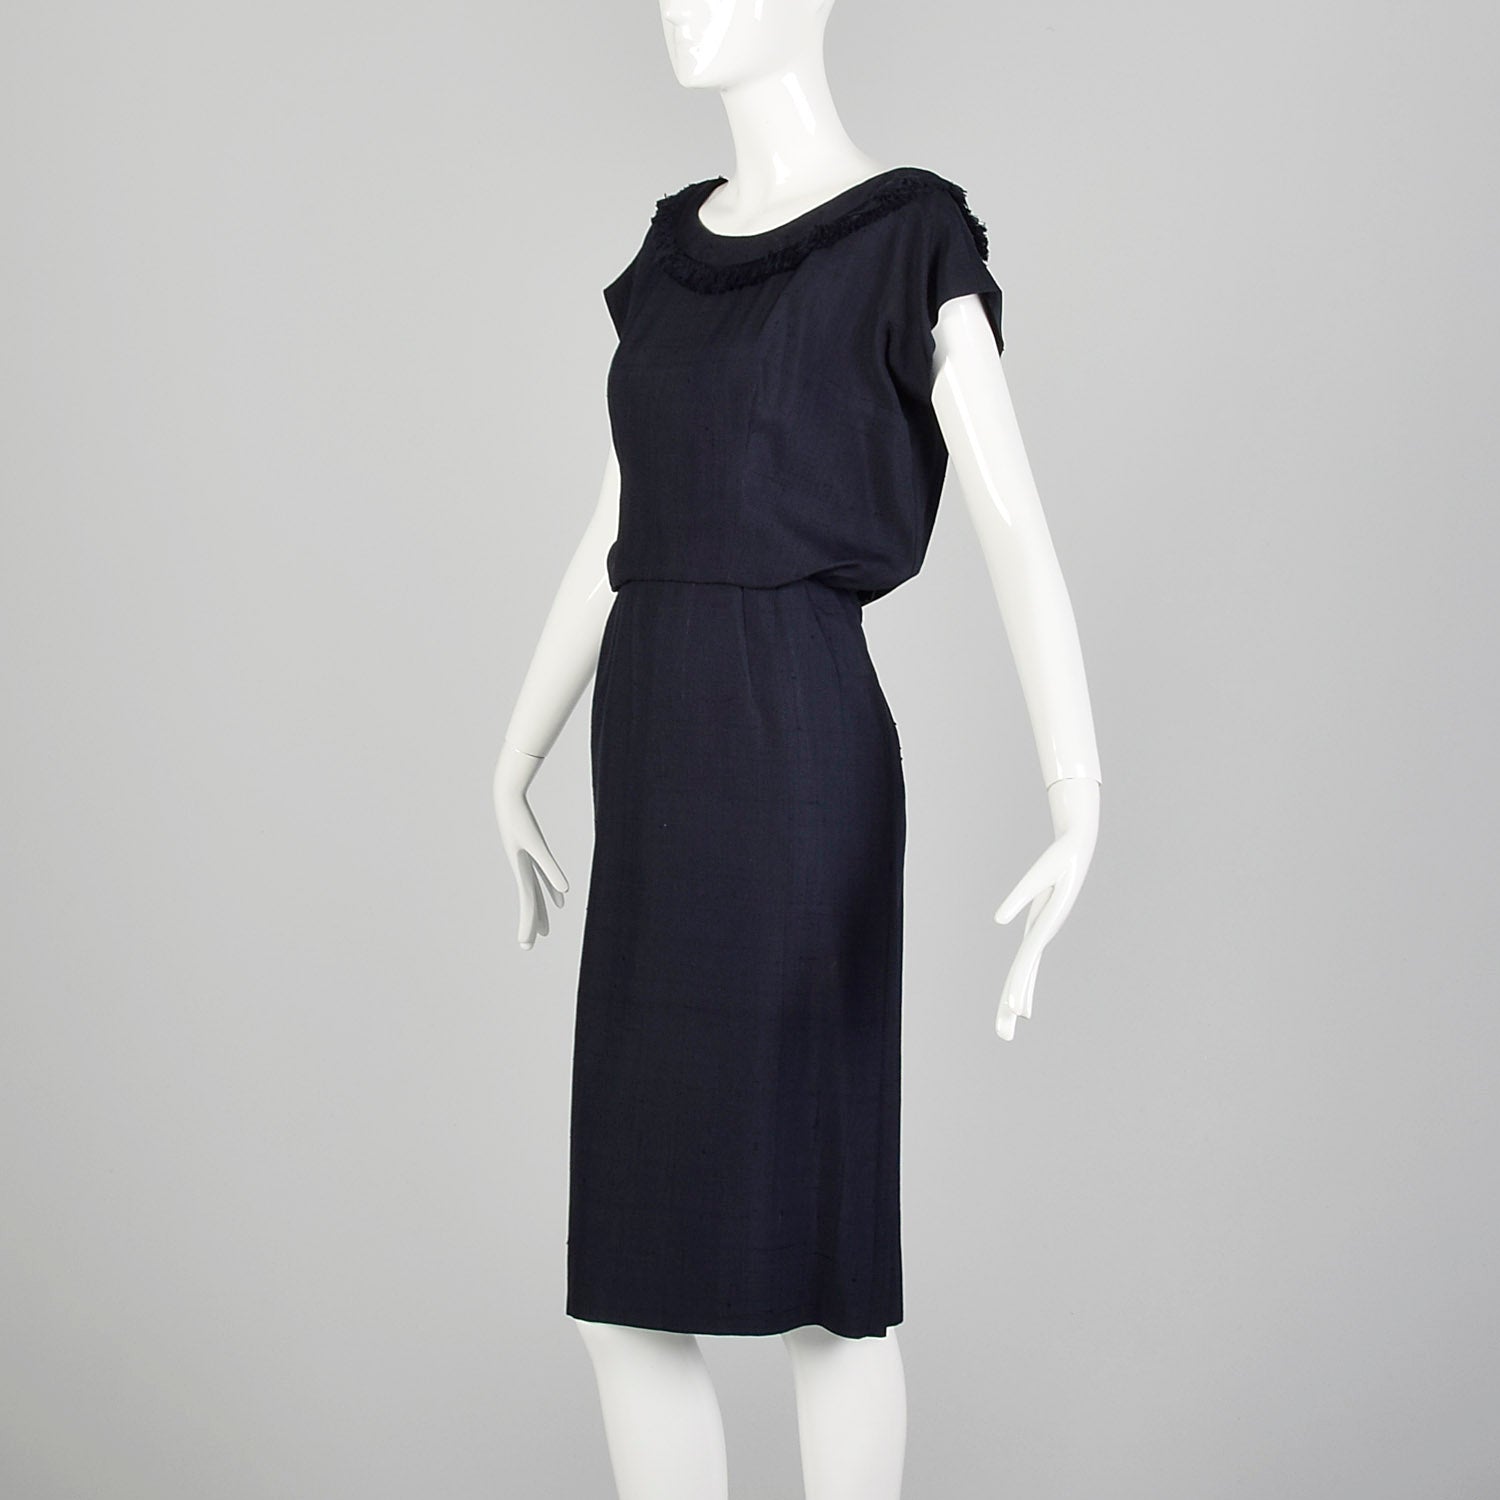 Small 1950s Suzy Perette Navy Blue Dress